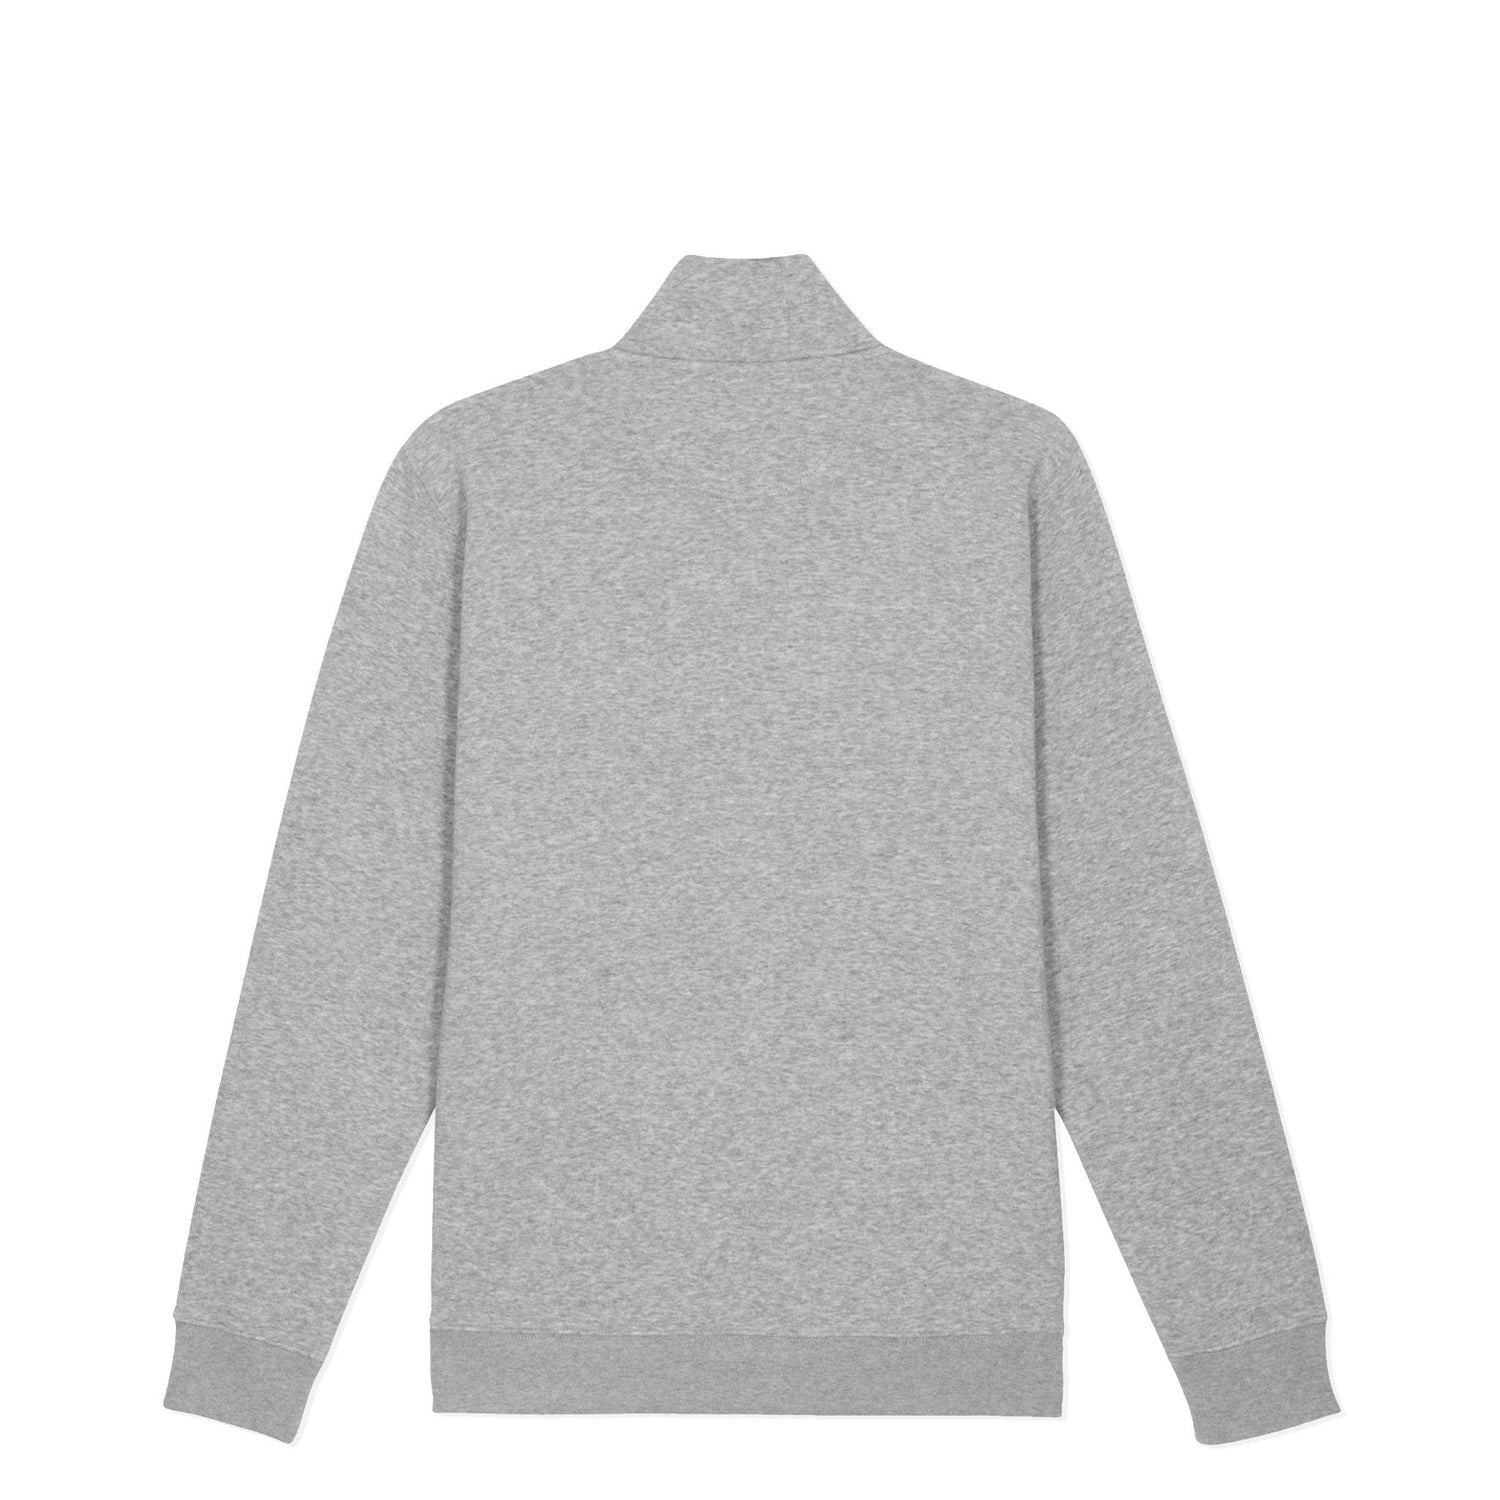 Tribe Core Grey Marl Quarter Zip - Organic Cotton Sweatshirt - One Choice Apparel